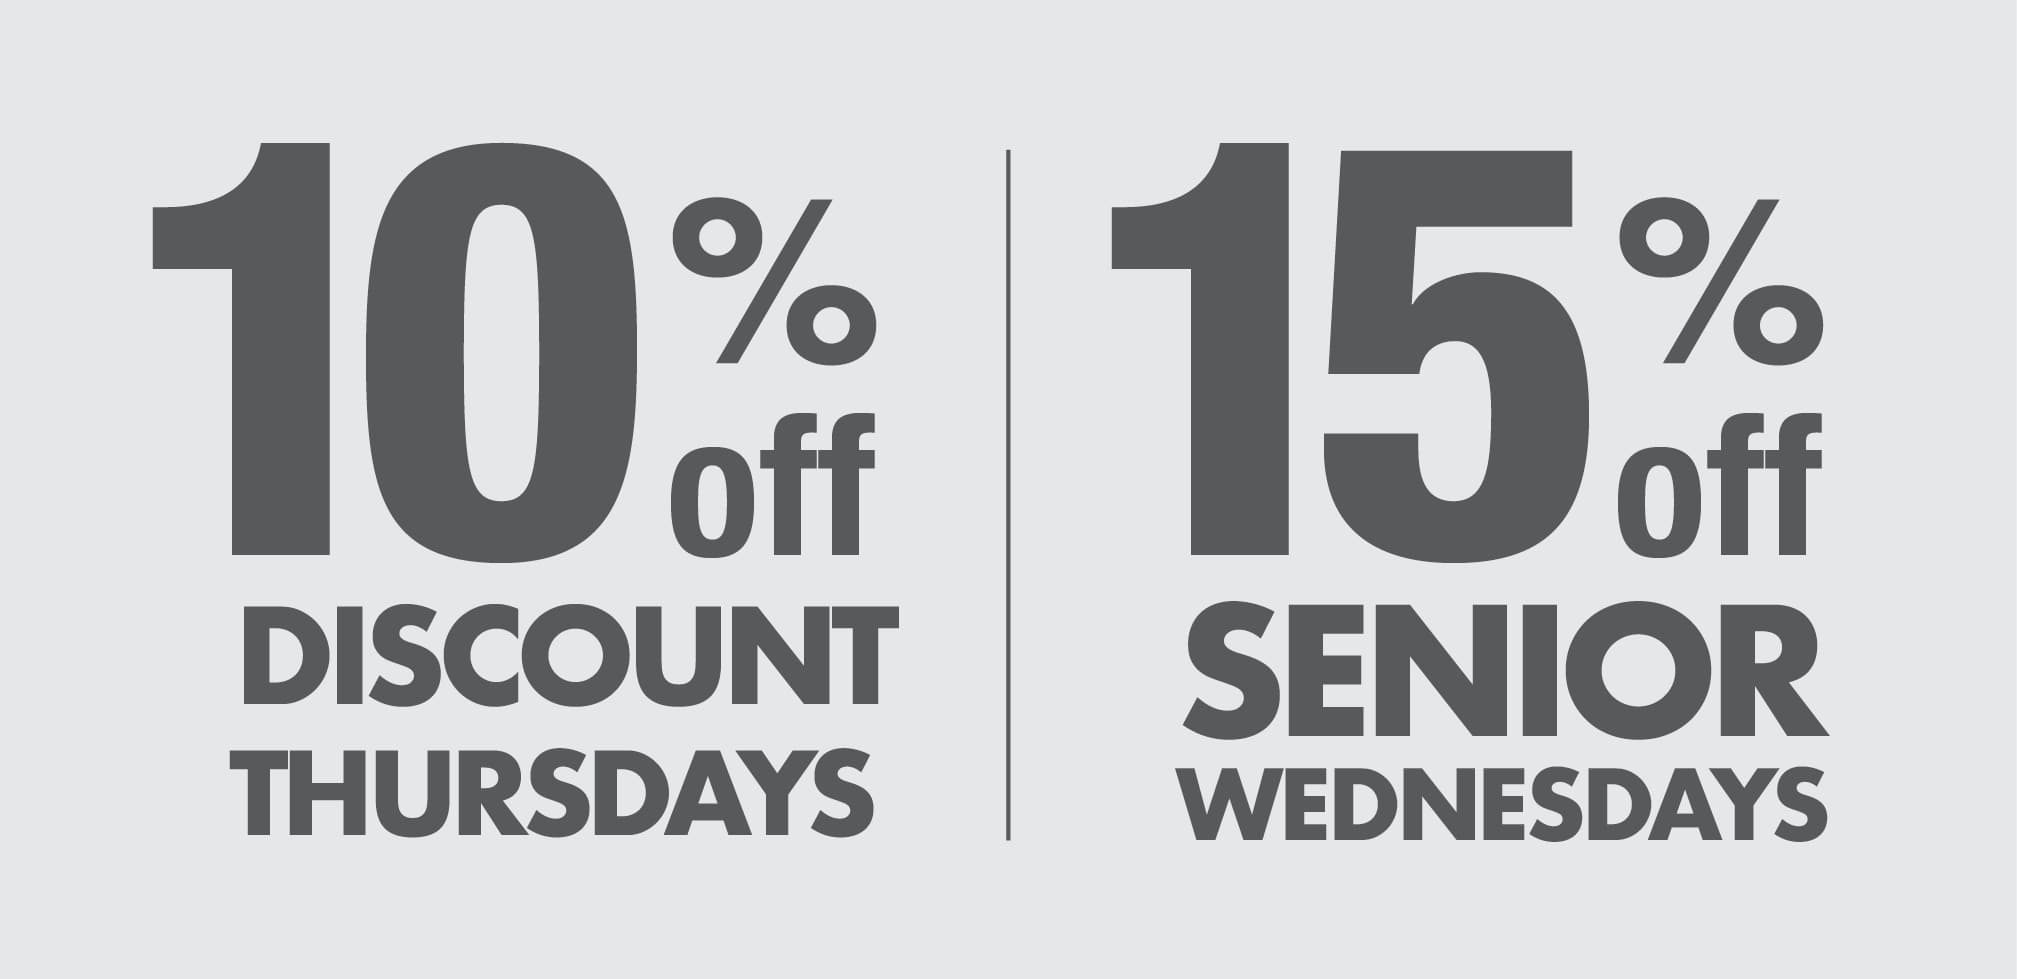 Discount Thursdays / Senior Wednesdays Banner